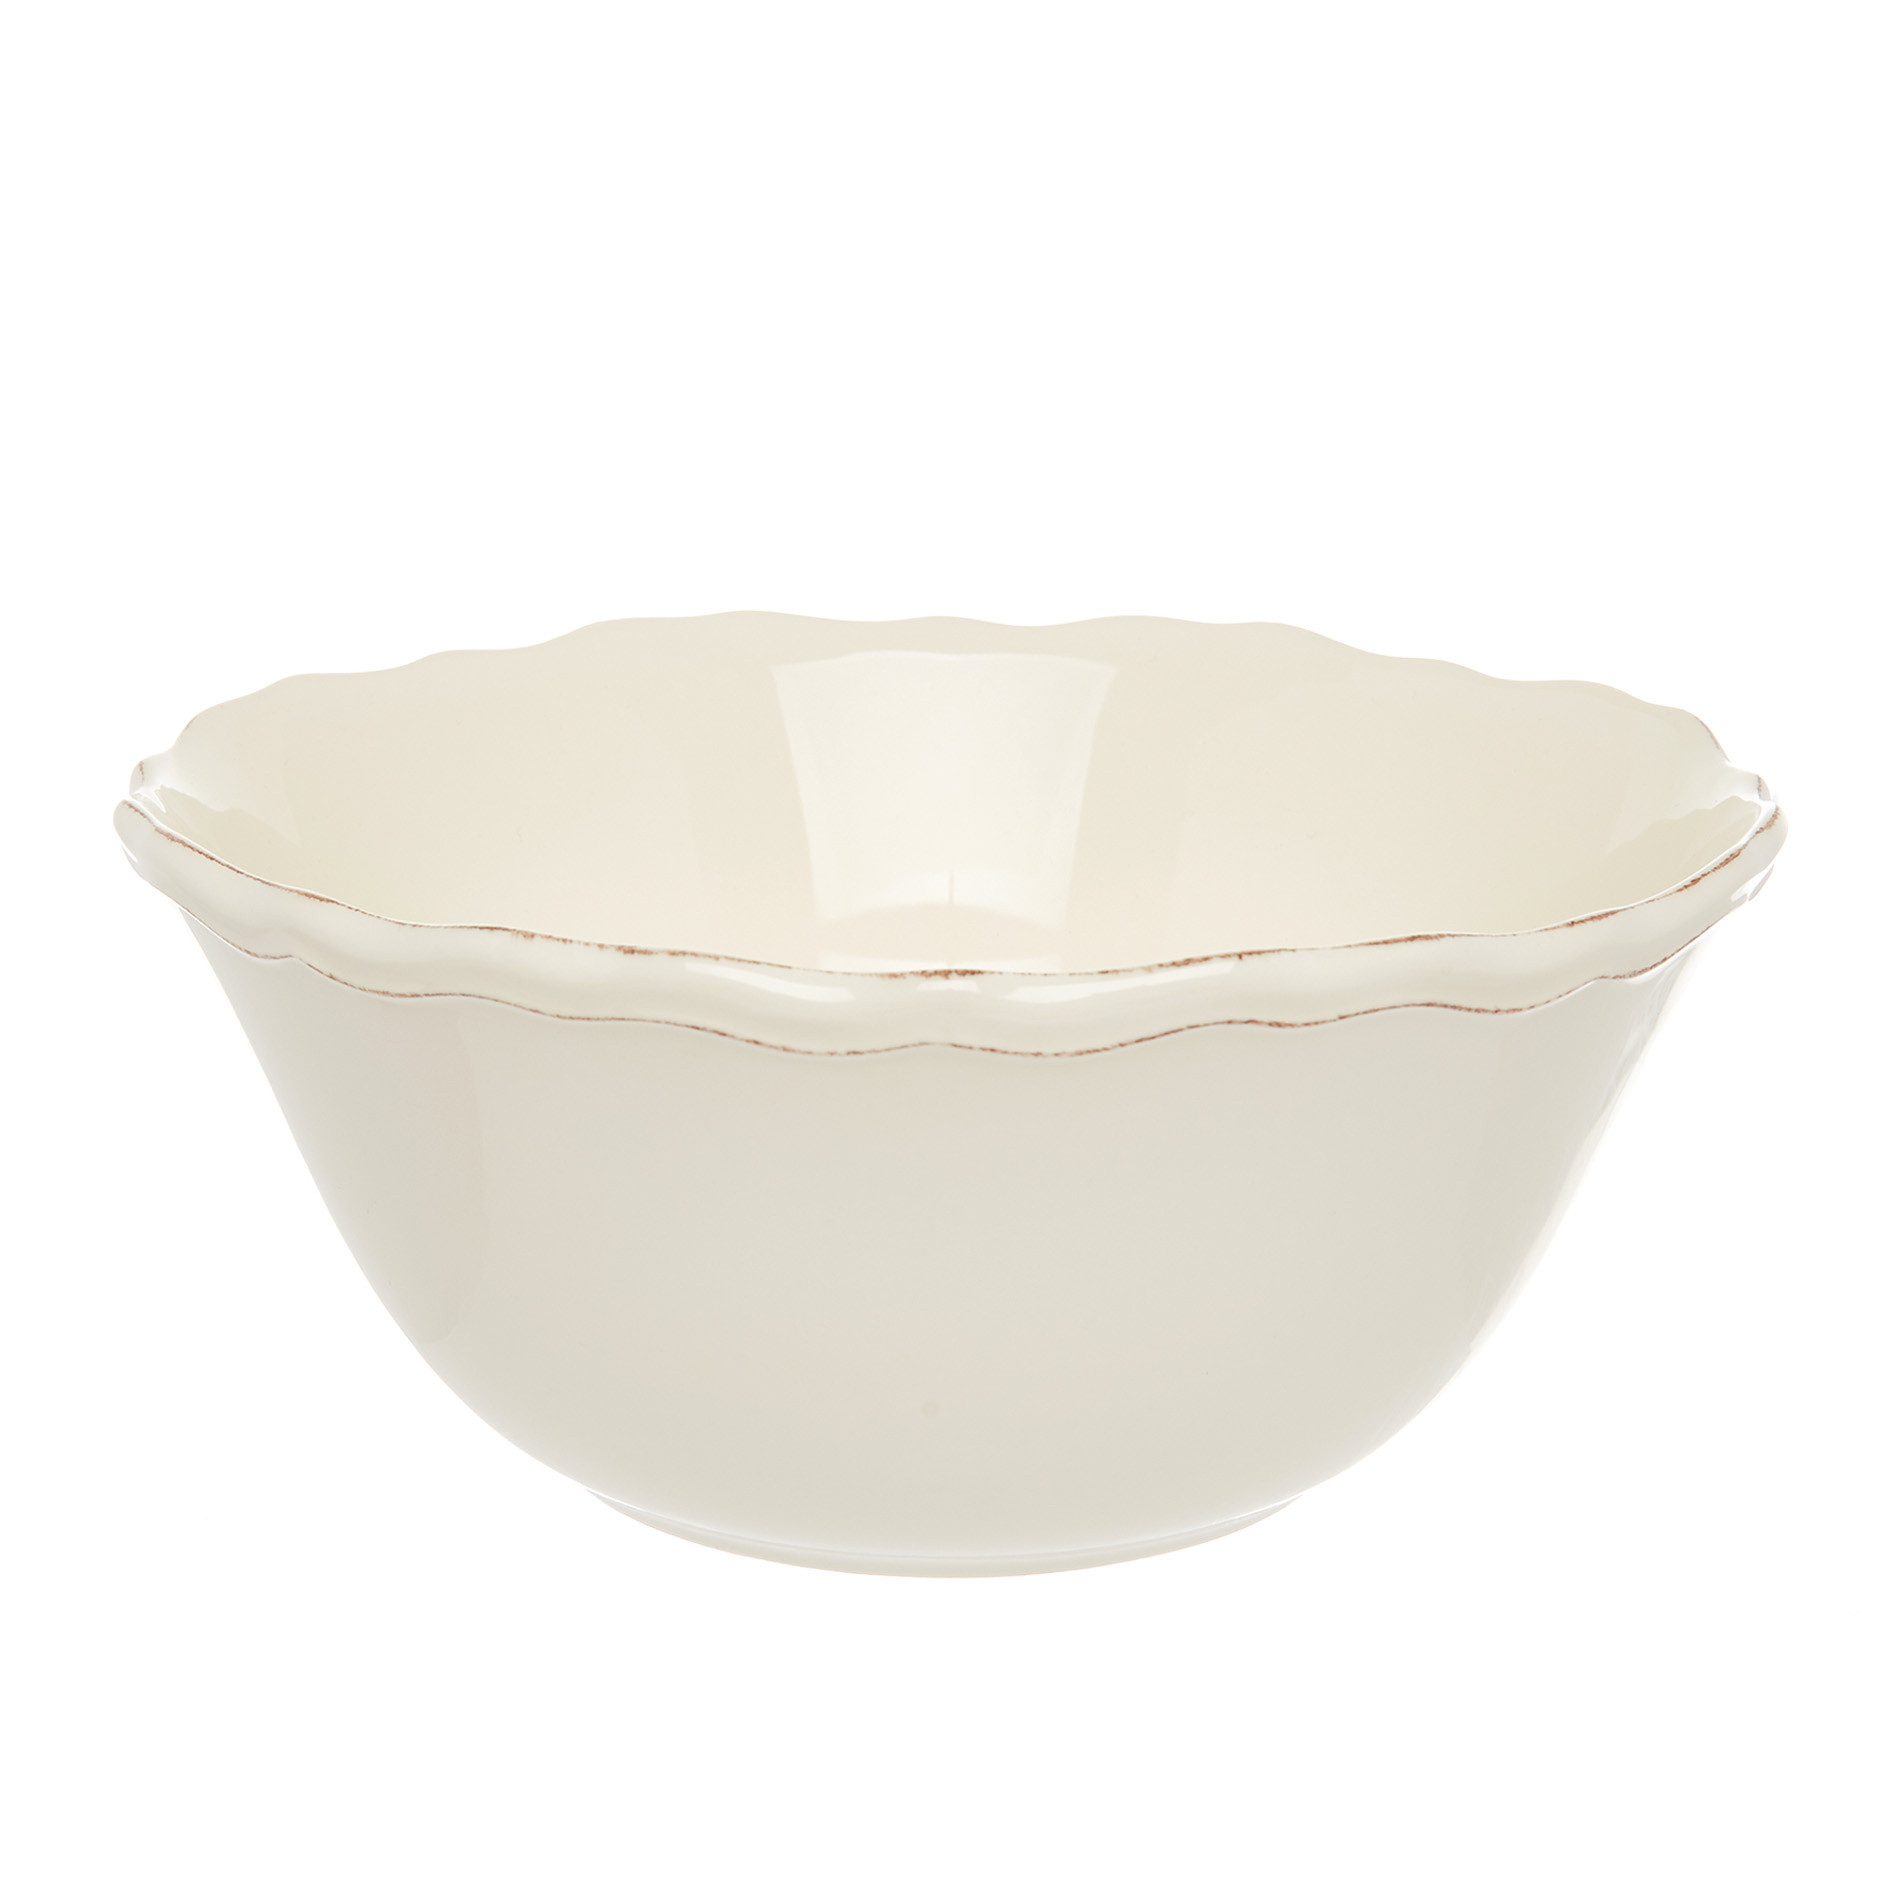 Dona Maria ceramic salad bowl, White Cream, large image number 0